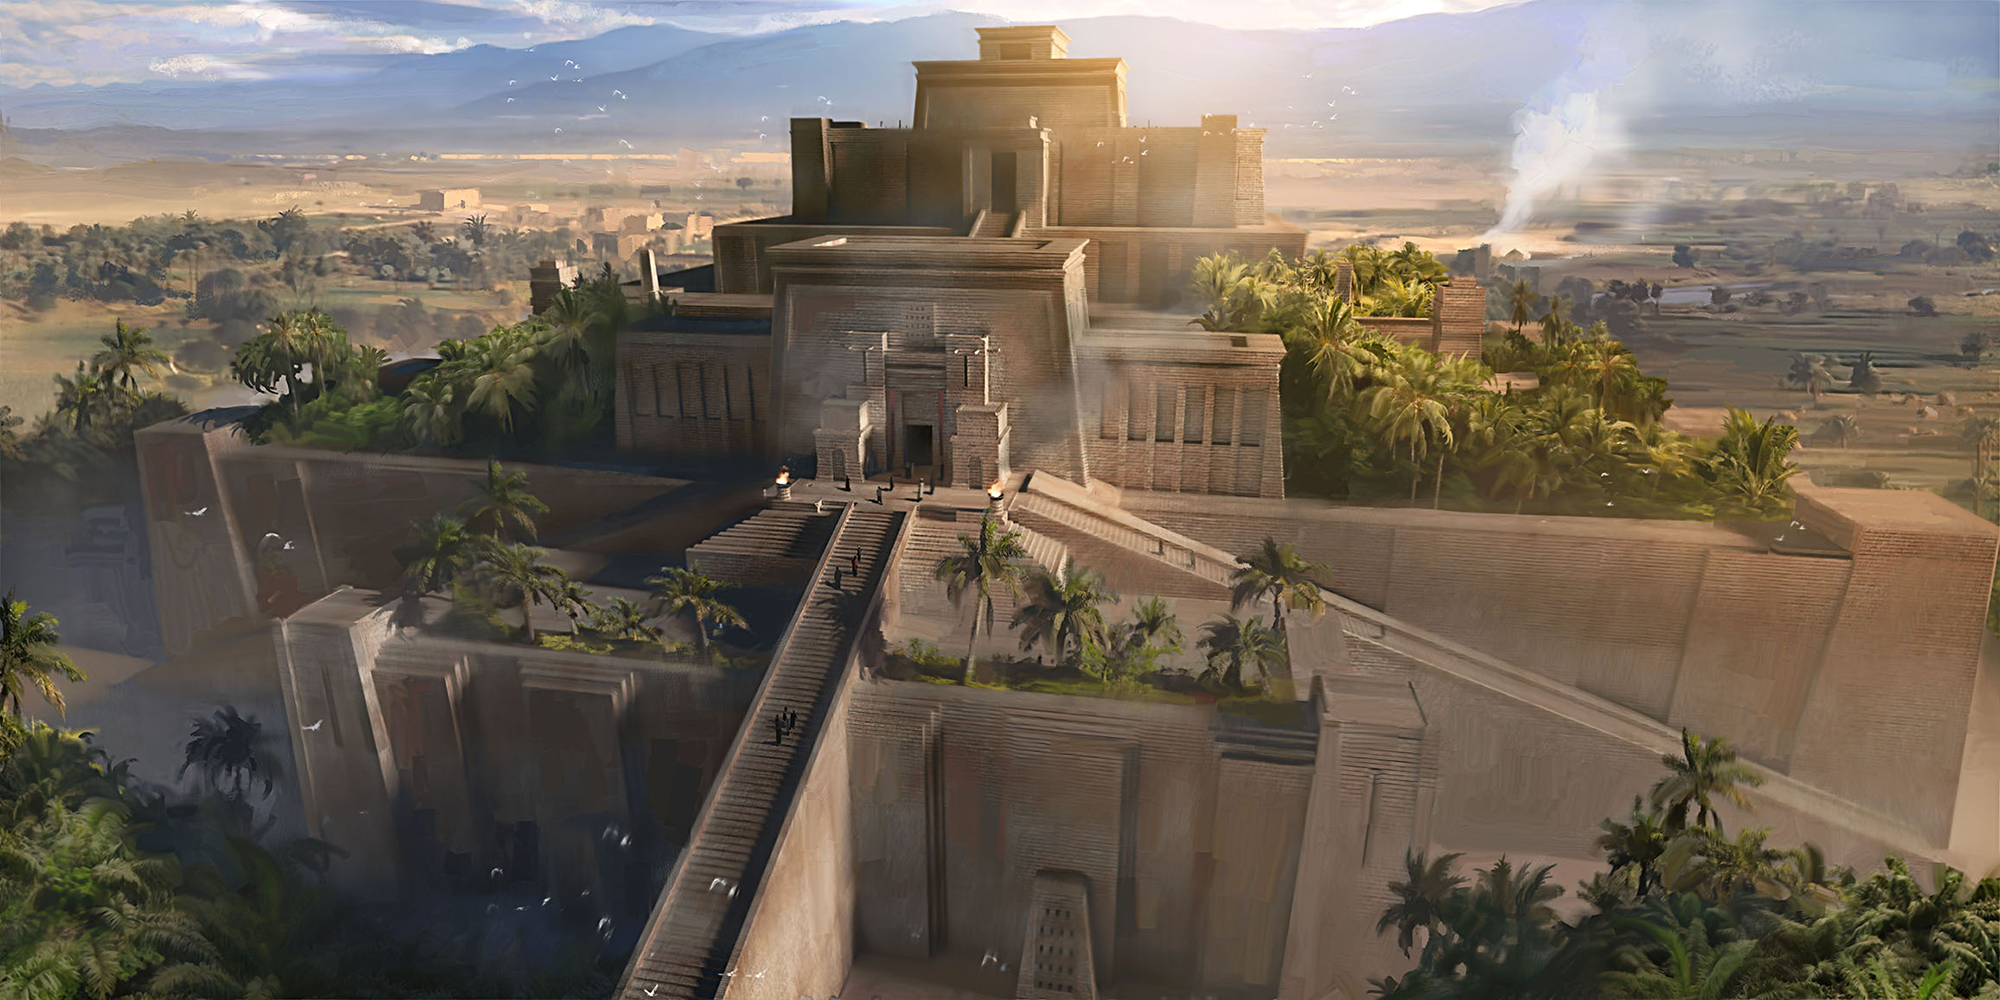 Ziggurat of Ur (Artist's Impression) (Illustration) - Ancient History Encyclopedia